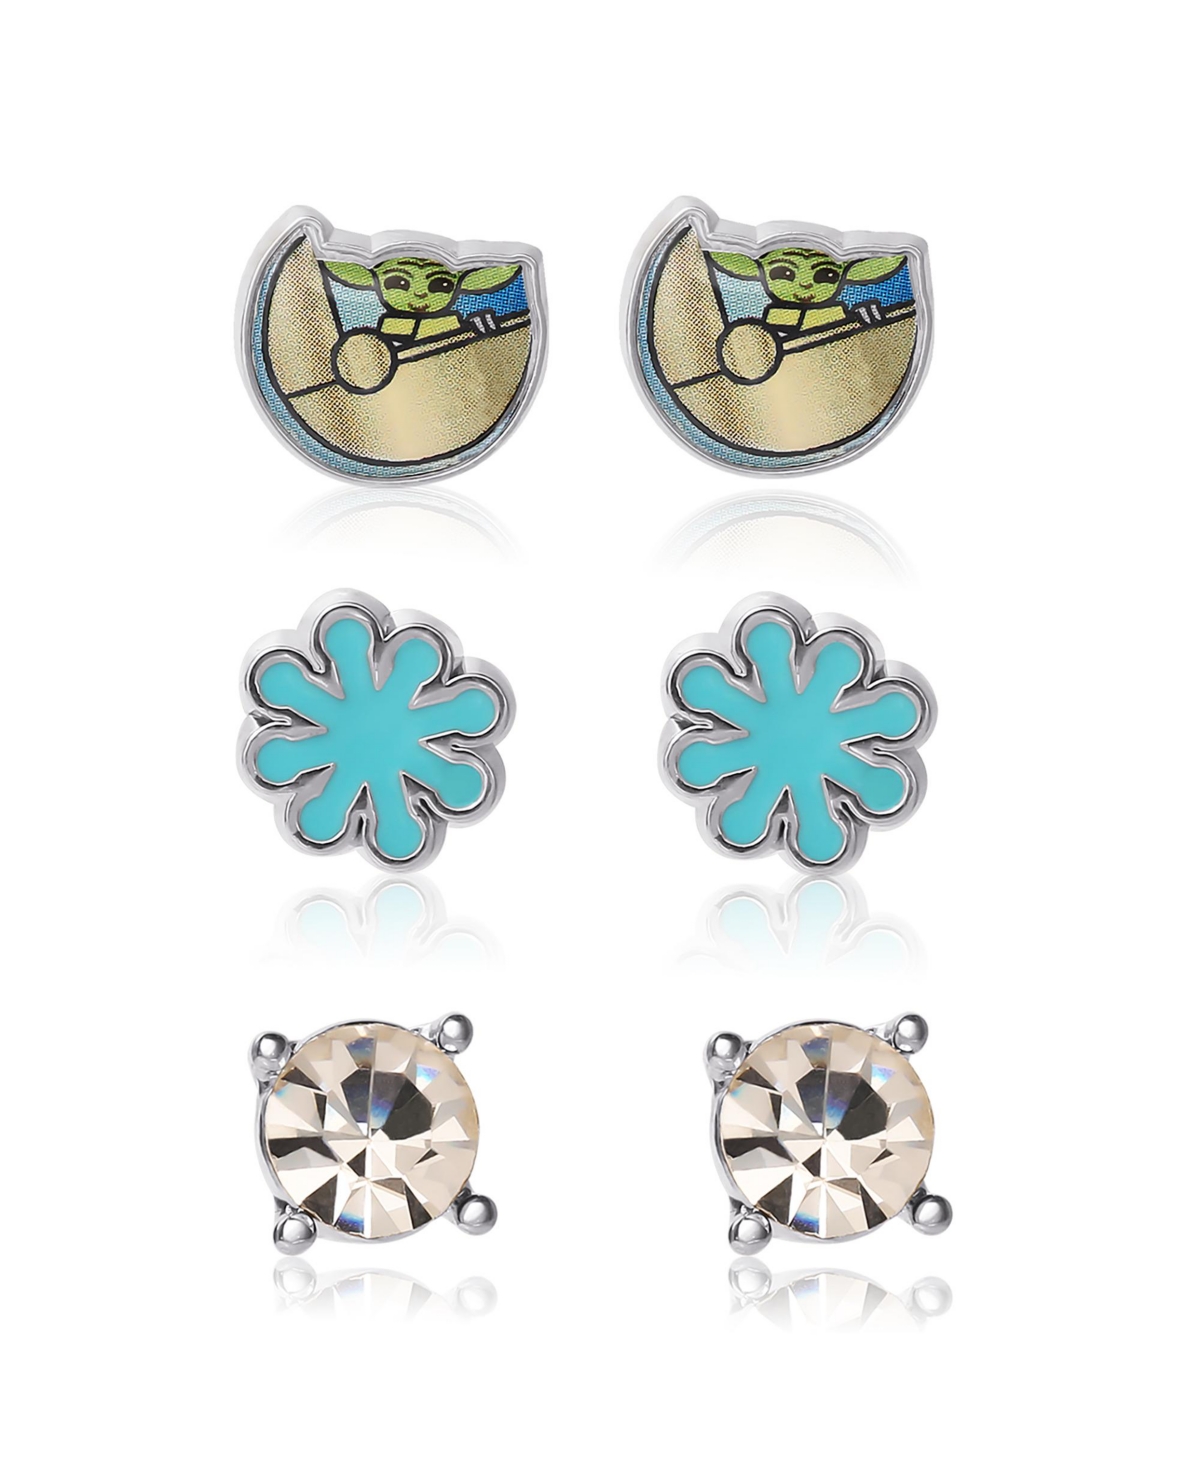 Grogu Fashion Silver Plated Stud Earrings Set - 3 Pairs - Silver tone, blue, green